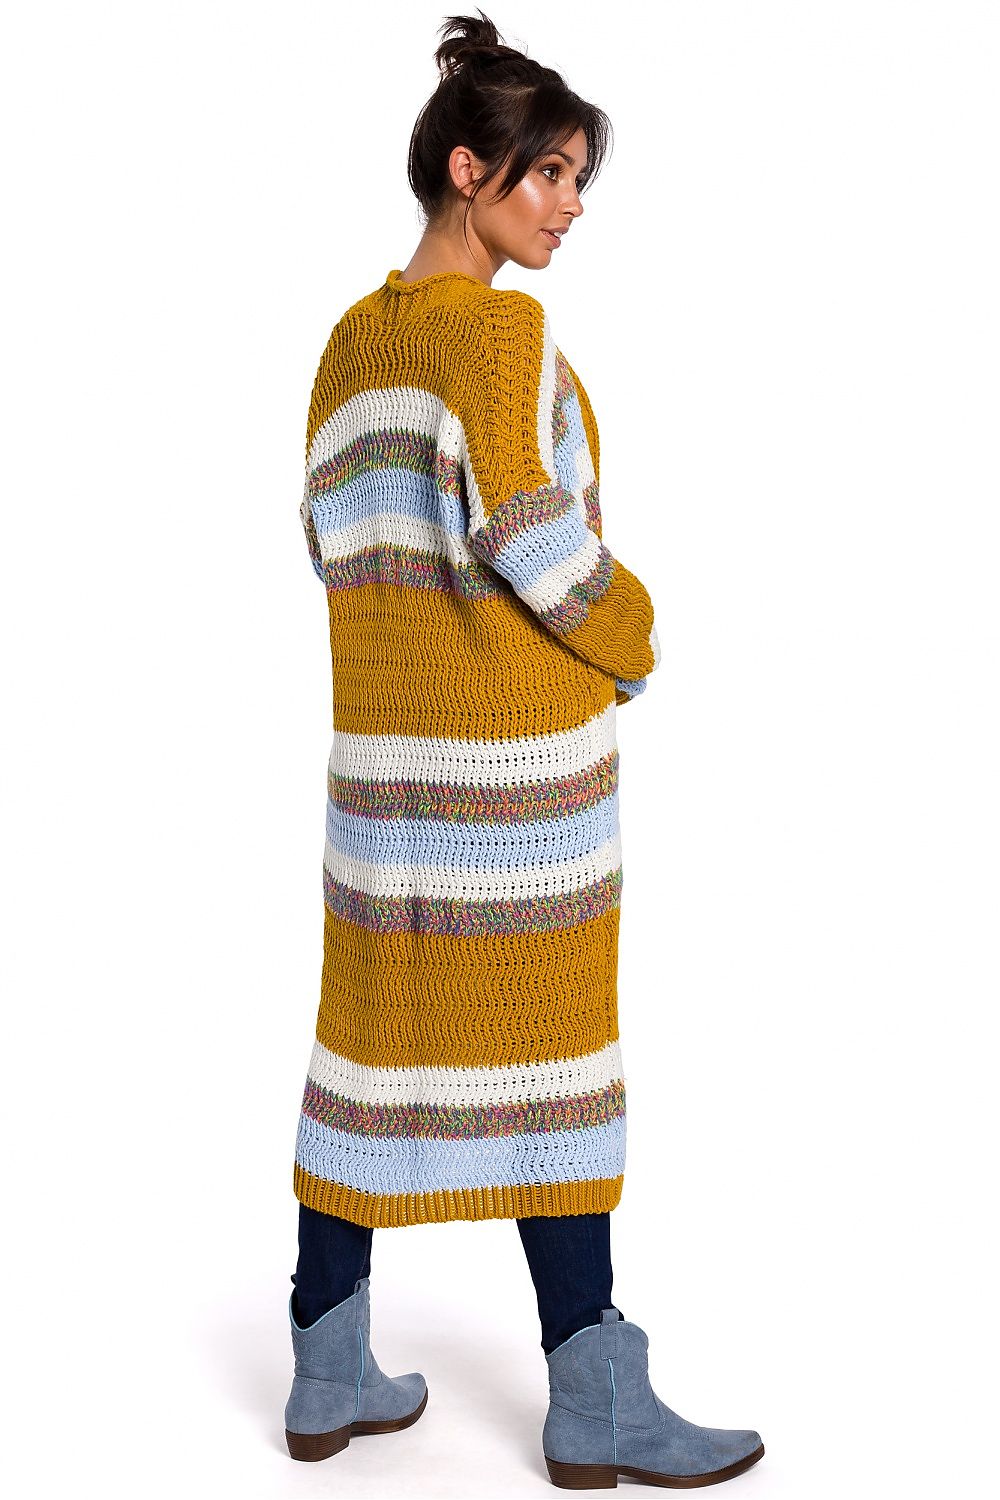 Kleding Dameskleding Sweaters Vesten Chunky Knit Vest Gehaakte Zonnebloem Stijl Lang Vest Kimono Vest Oversized Geel Lang Gebreid Vest 